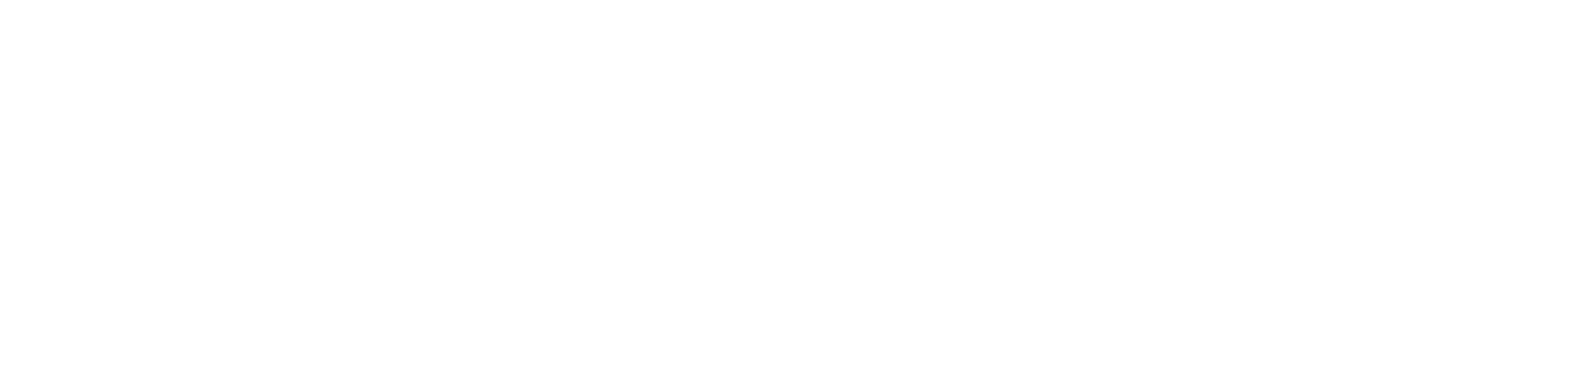 Future-Proof Your Future